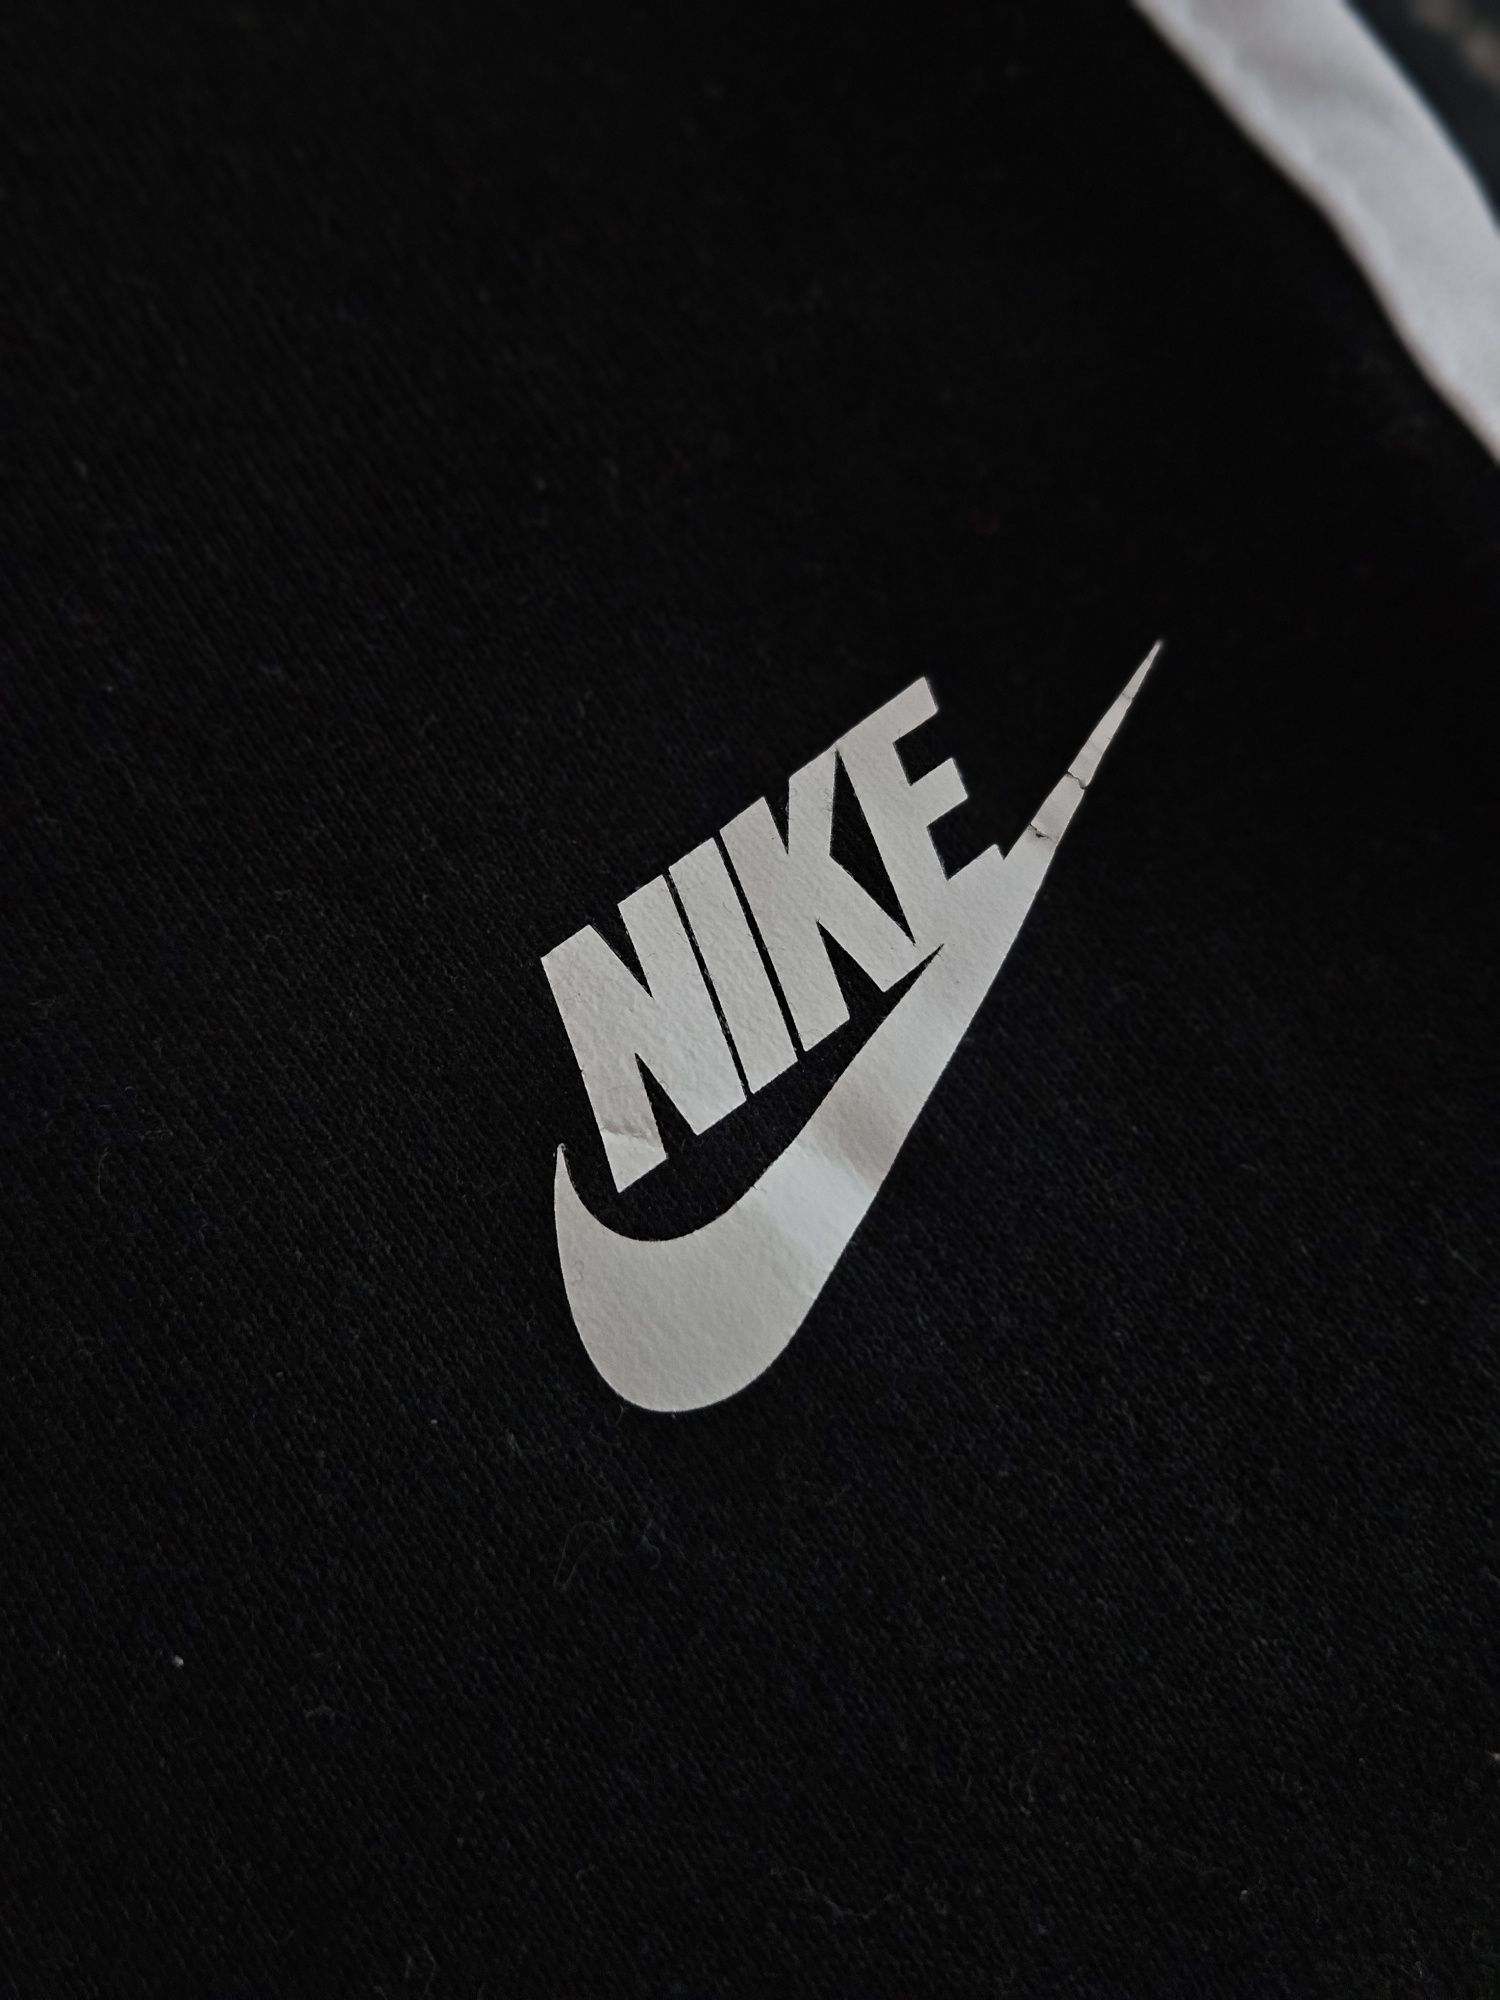 Colanți Nike non originali